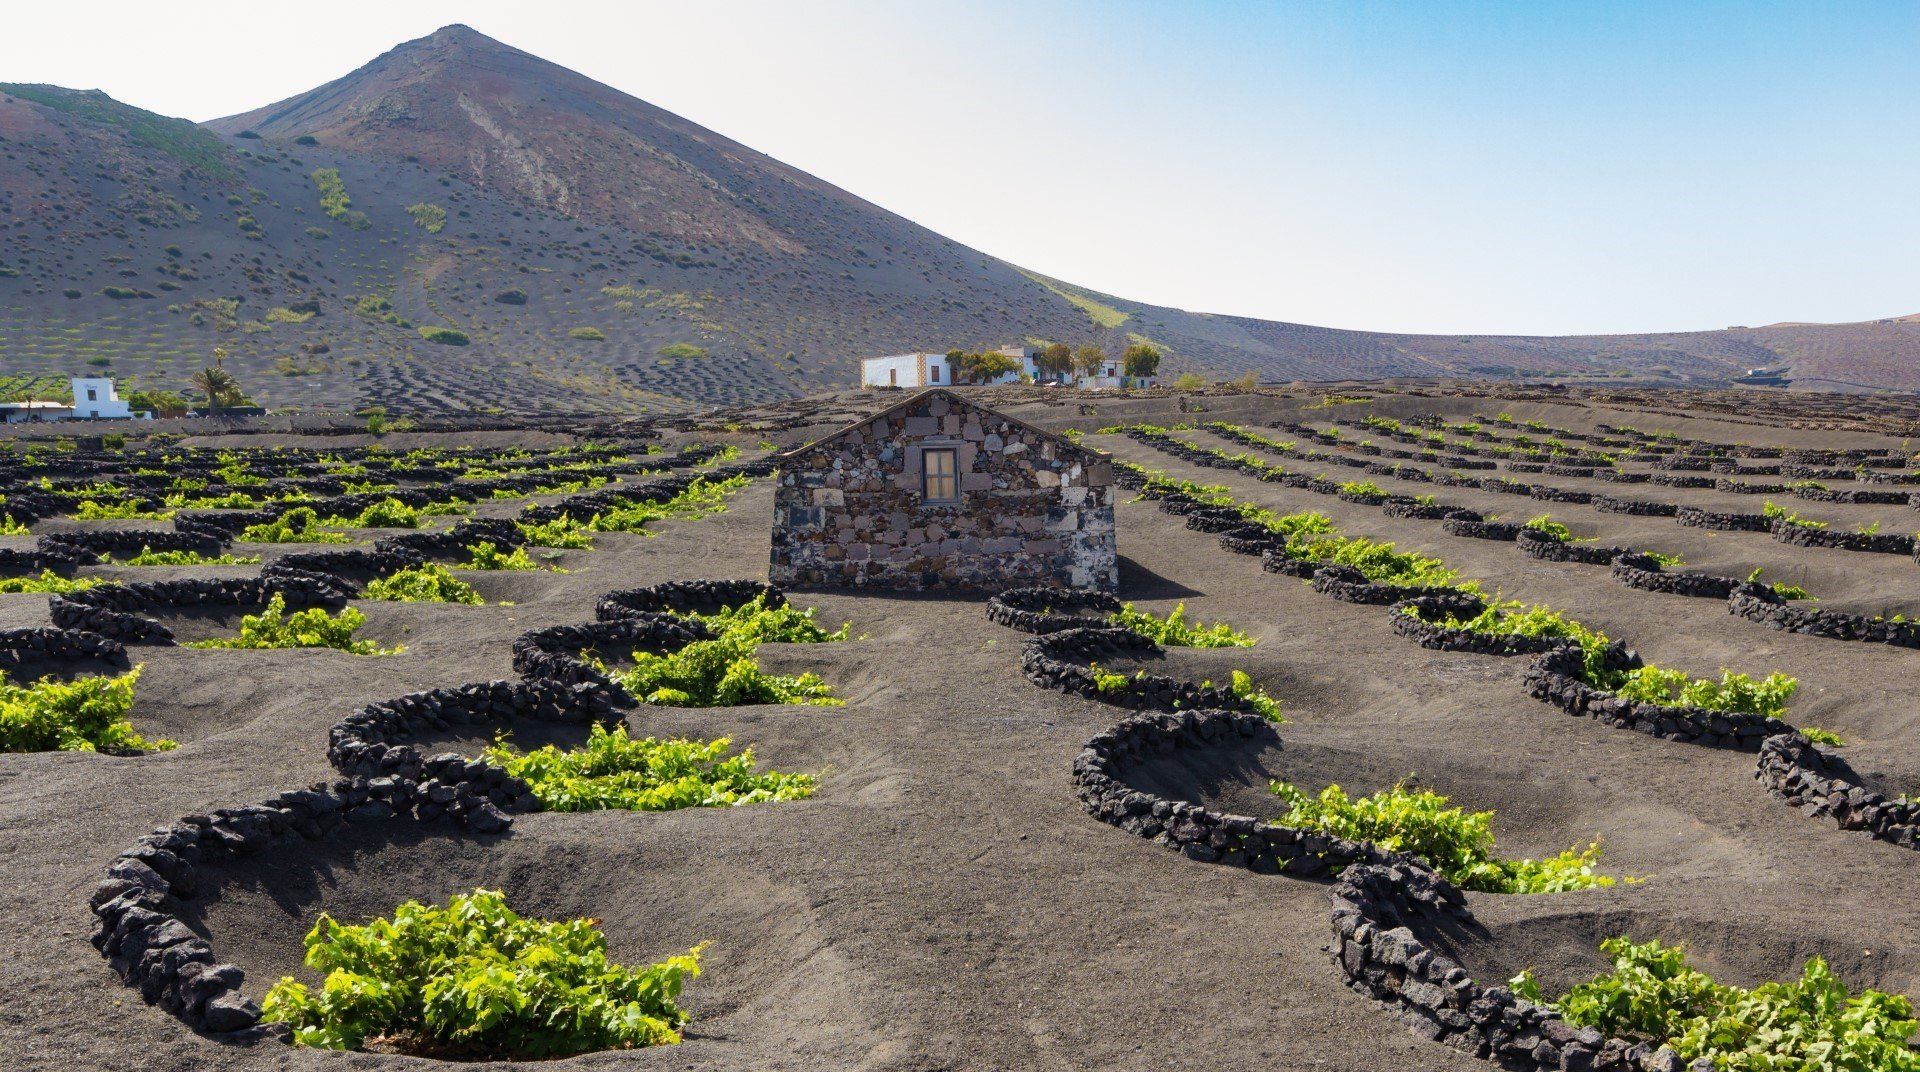 Lanzarote's wine-making region, La Geria, a 10 minute drive from Puerto del Carmen